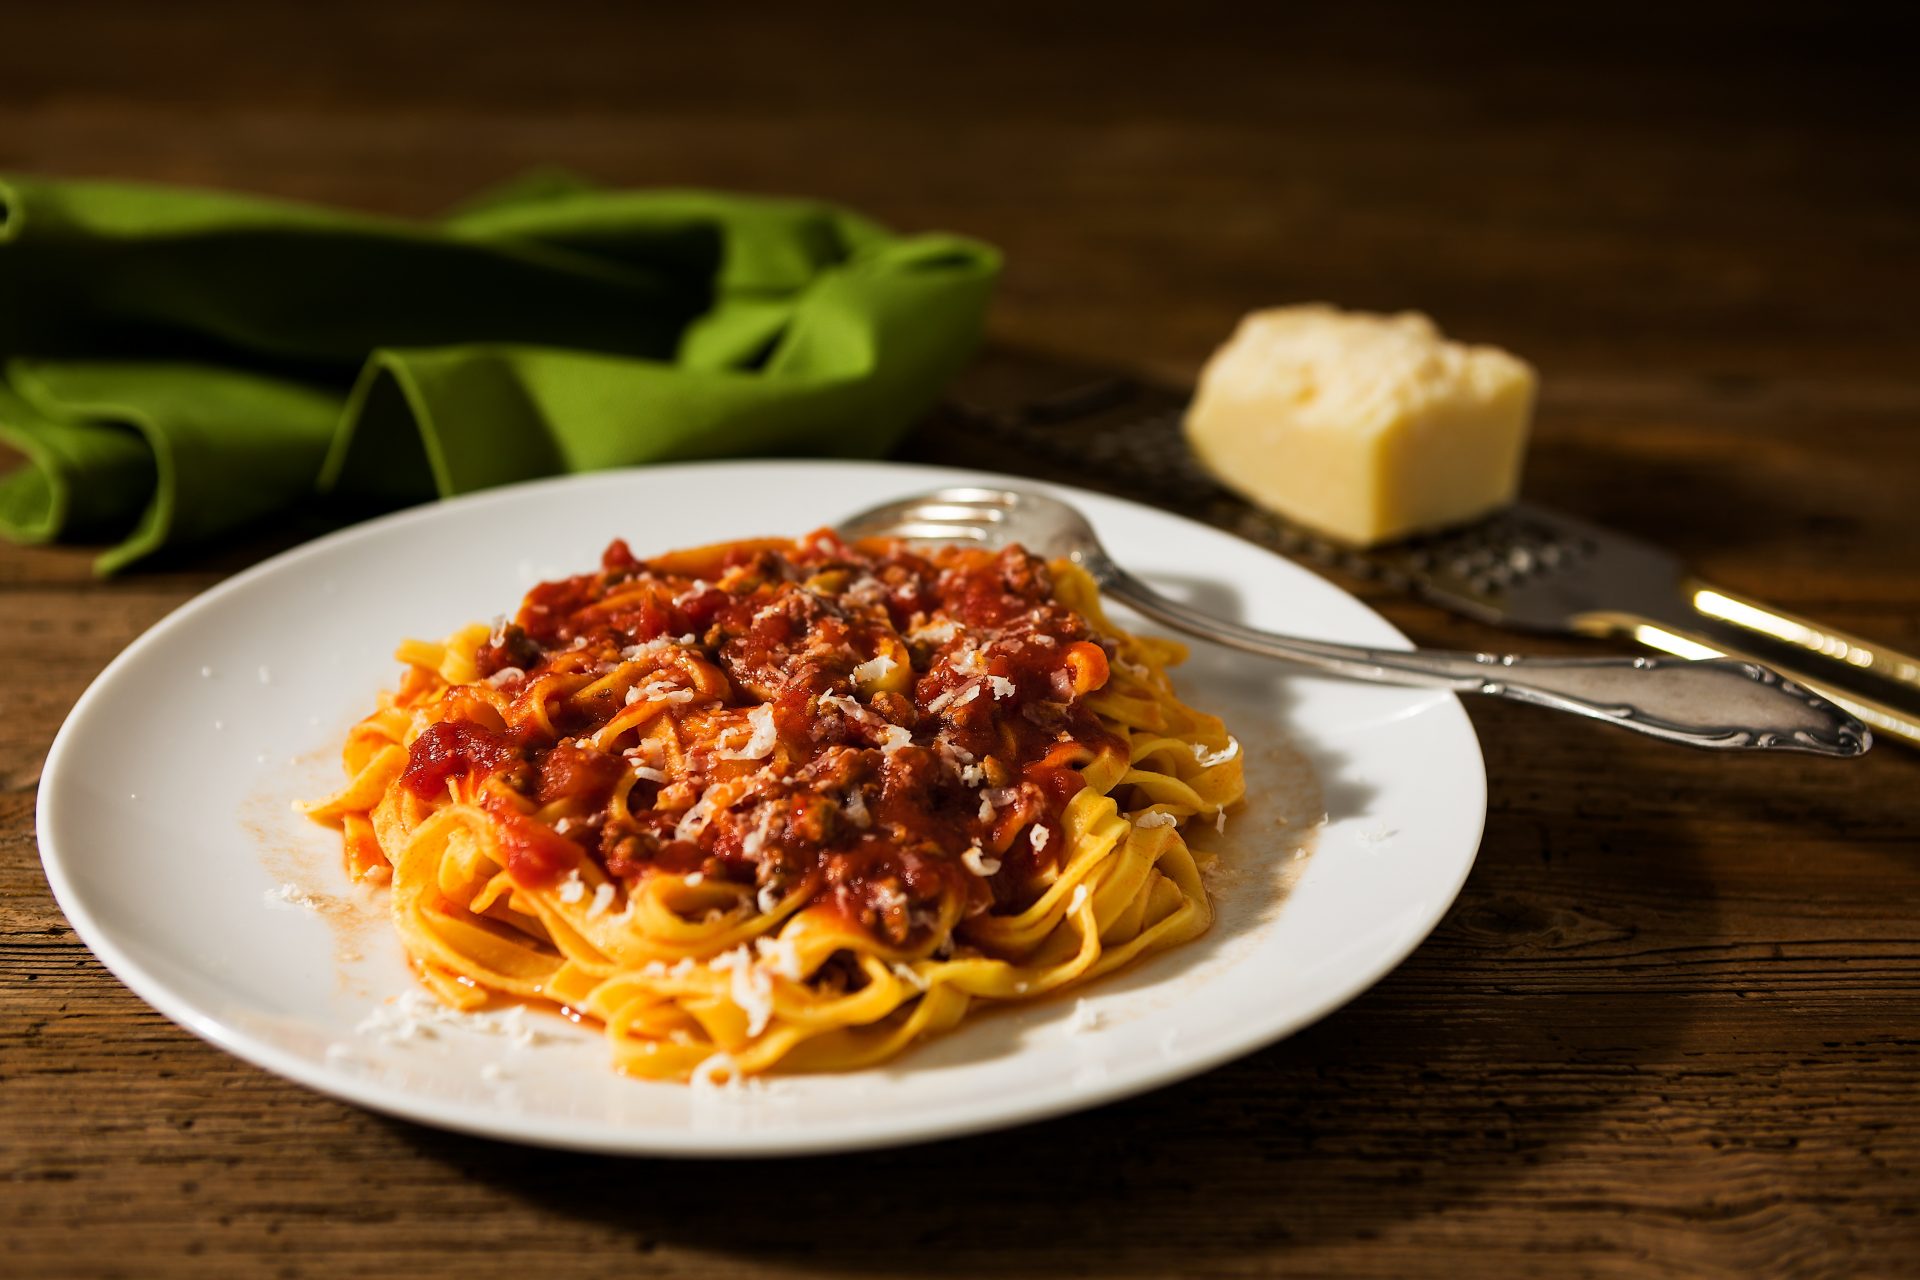 Tagliatelle,Pasta,With,Bolognese,Ragu,Over,A,Rustic,Table